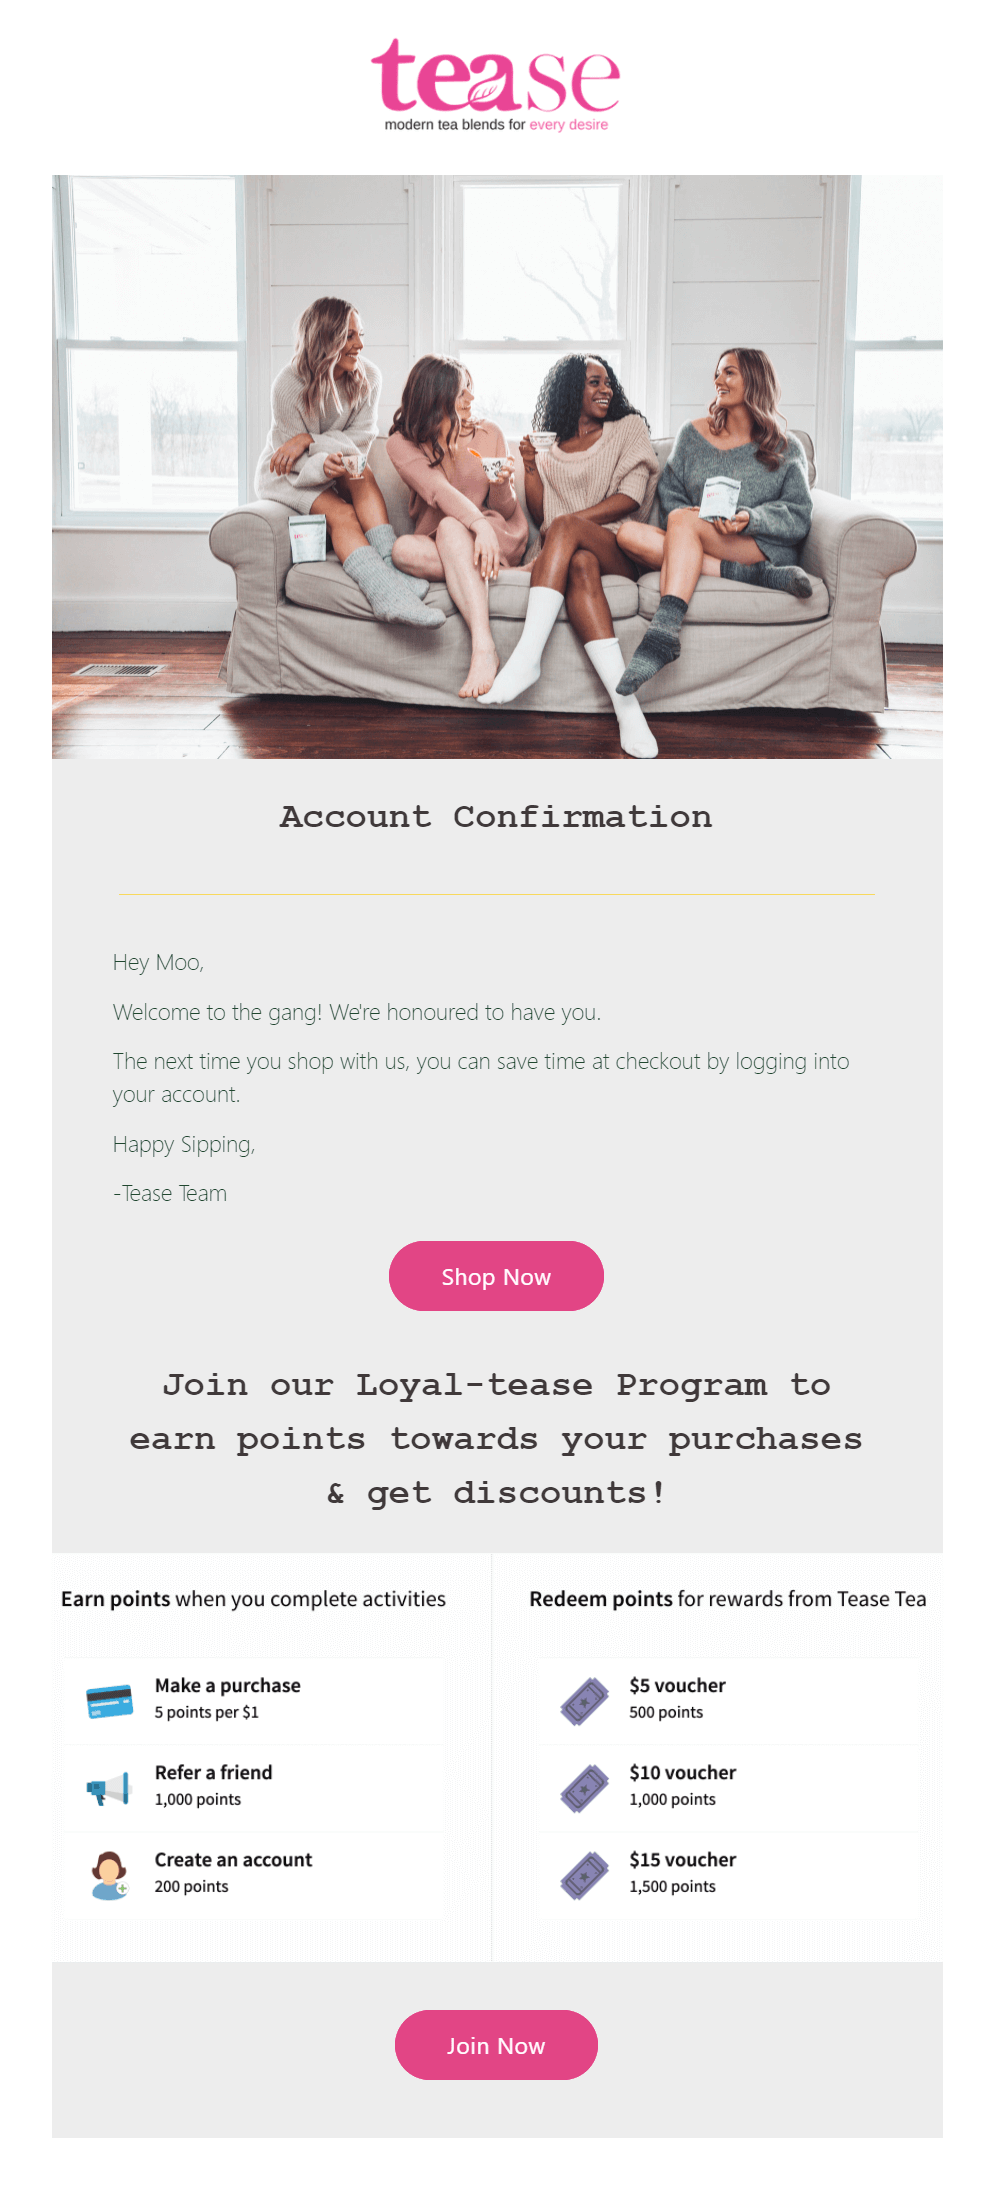 tease tea account confirmation email